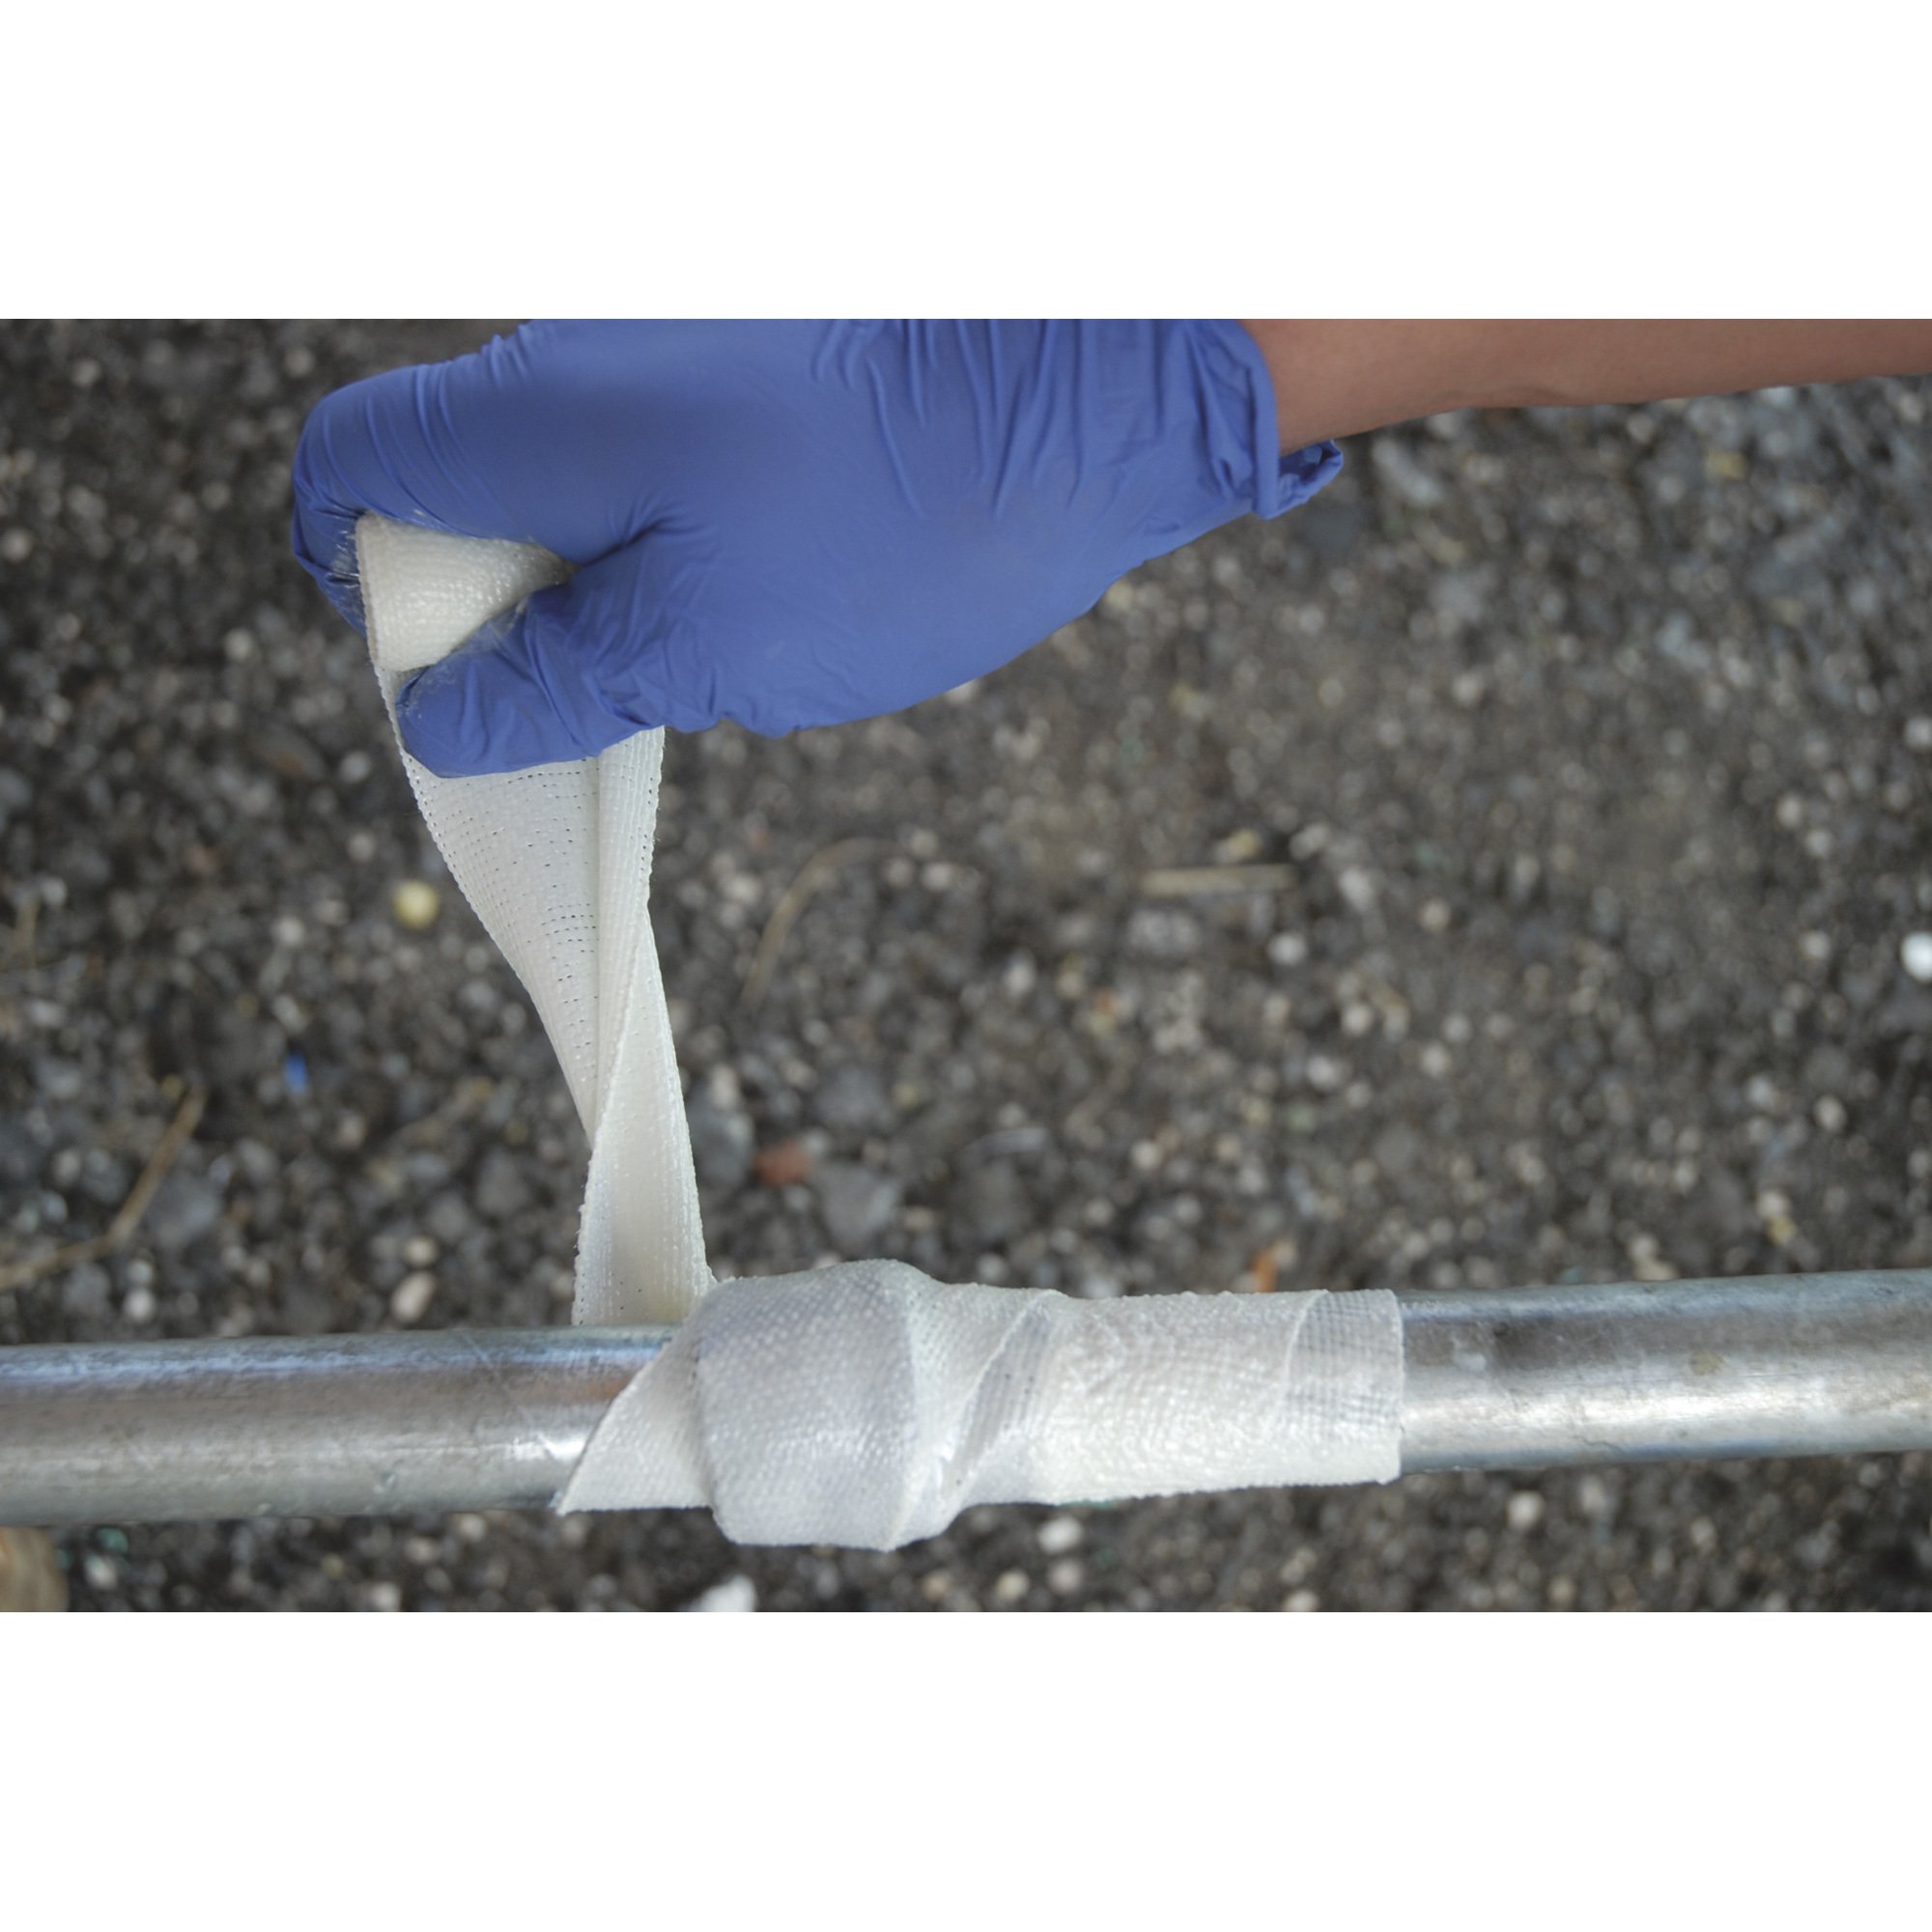 Berry Plastics PVC Utility Pipewrap Tape (711D)